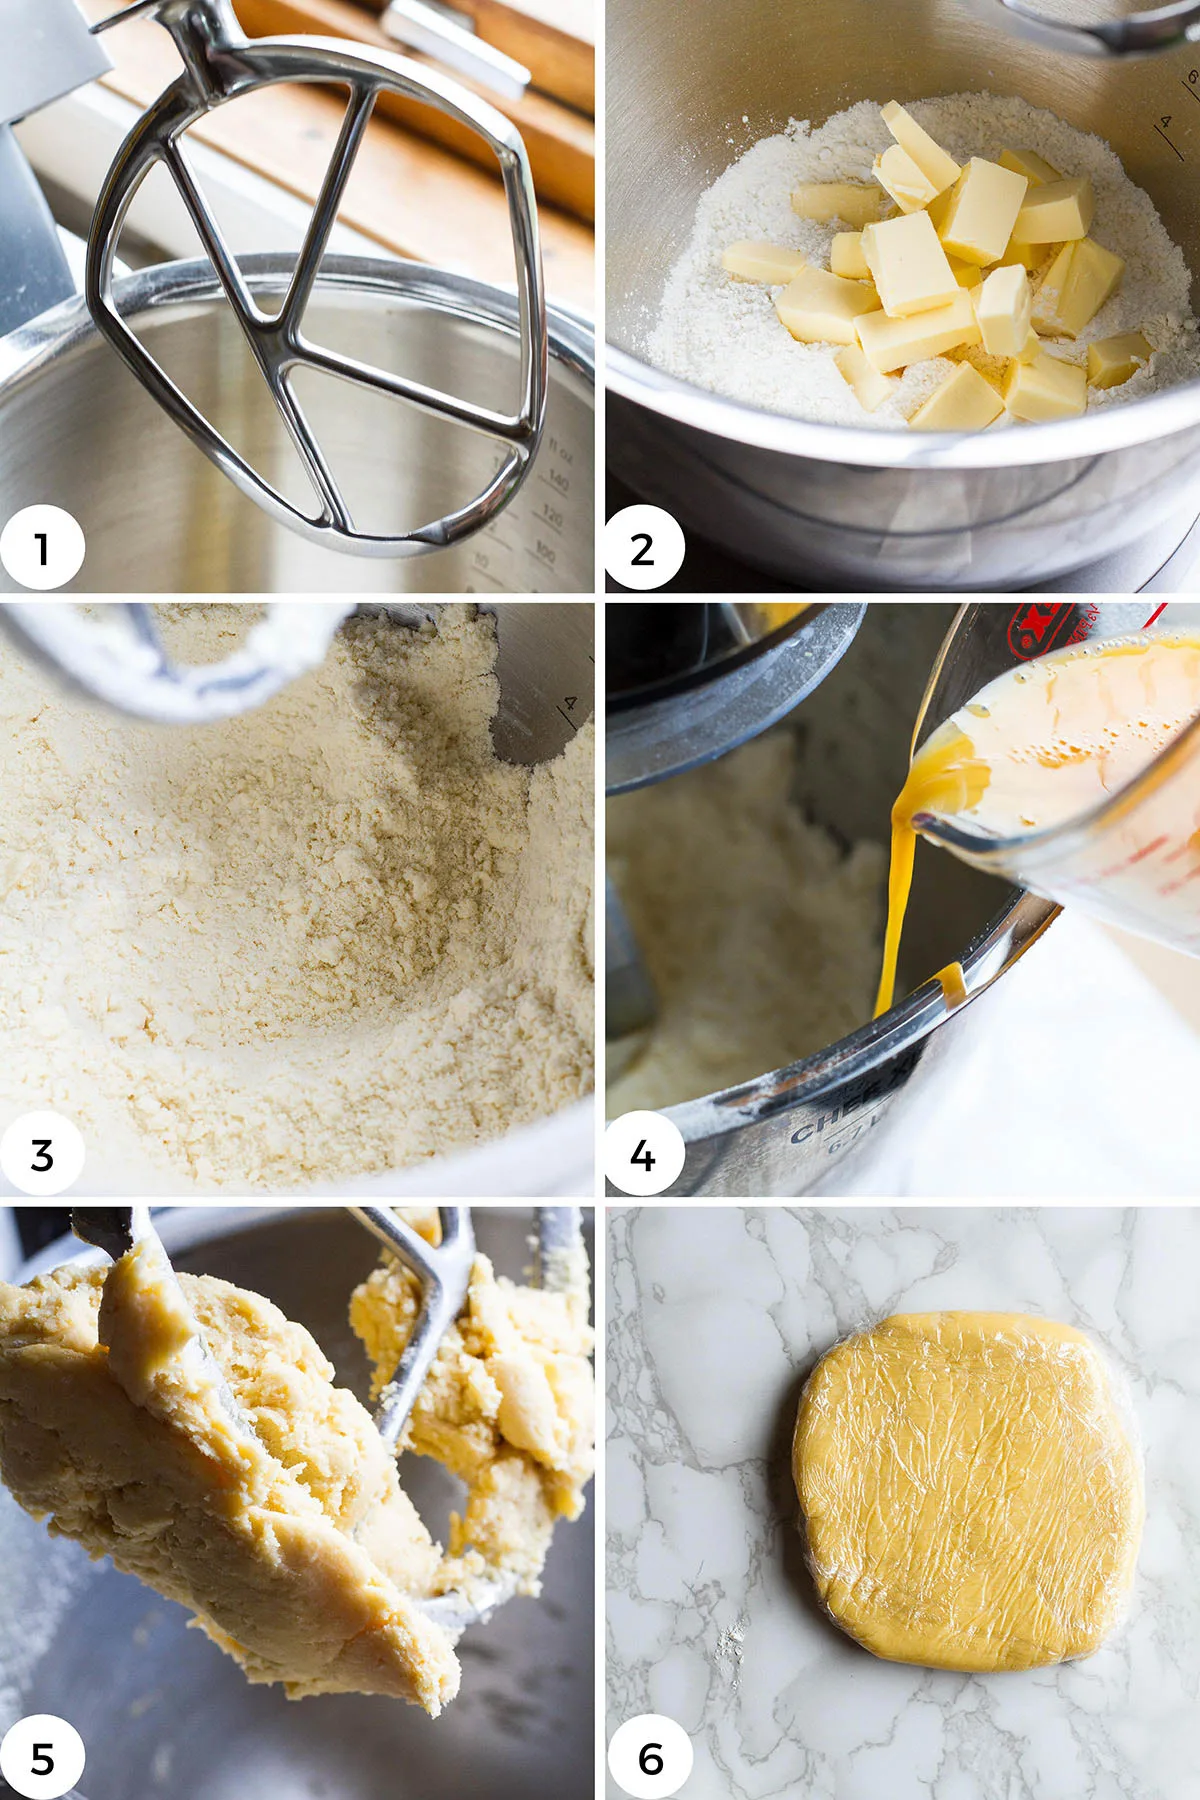 Steps to make the tart dough.